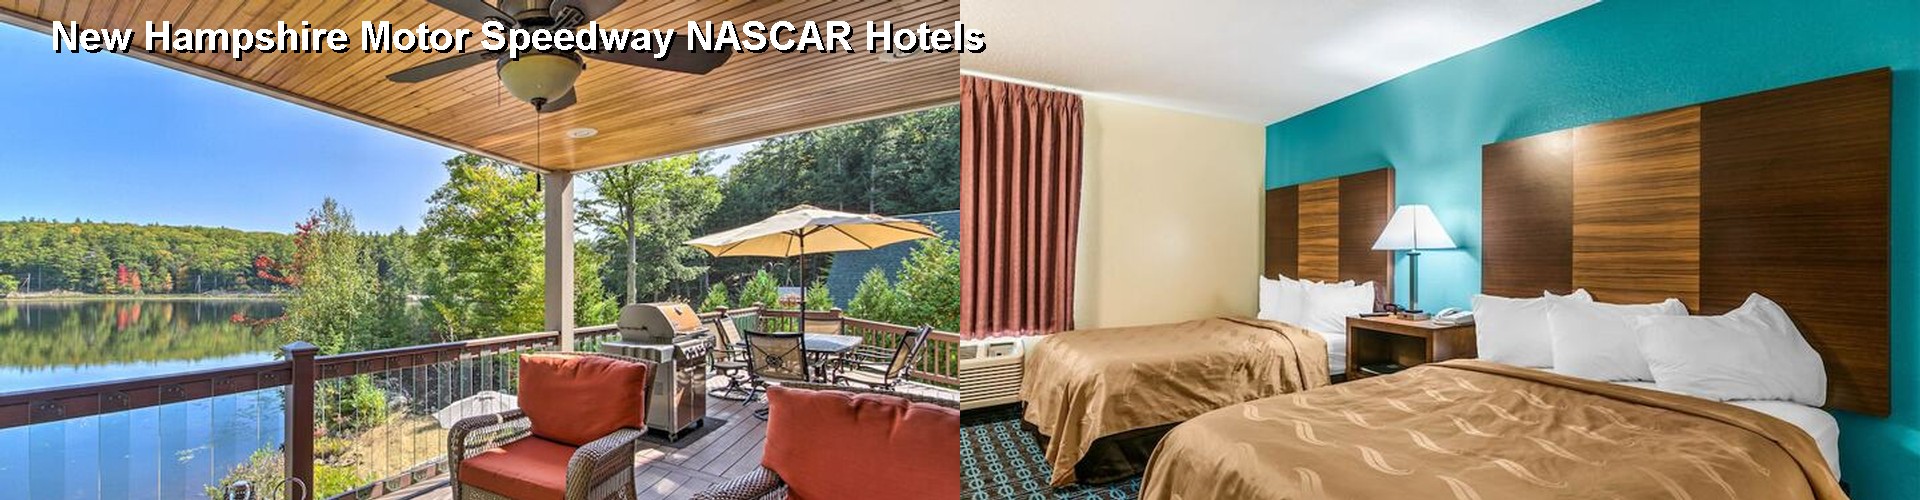 5 Best Hotels near New Hampshire Motor Speedway NASCAR